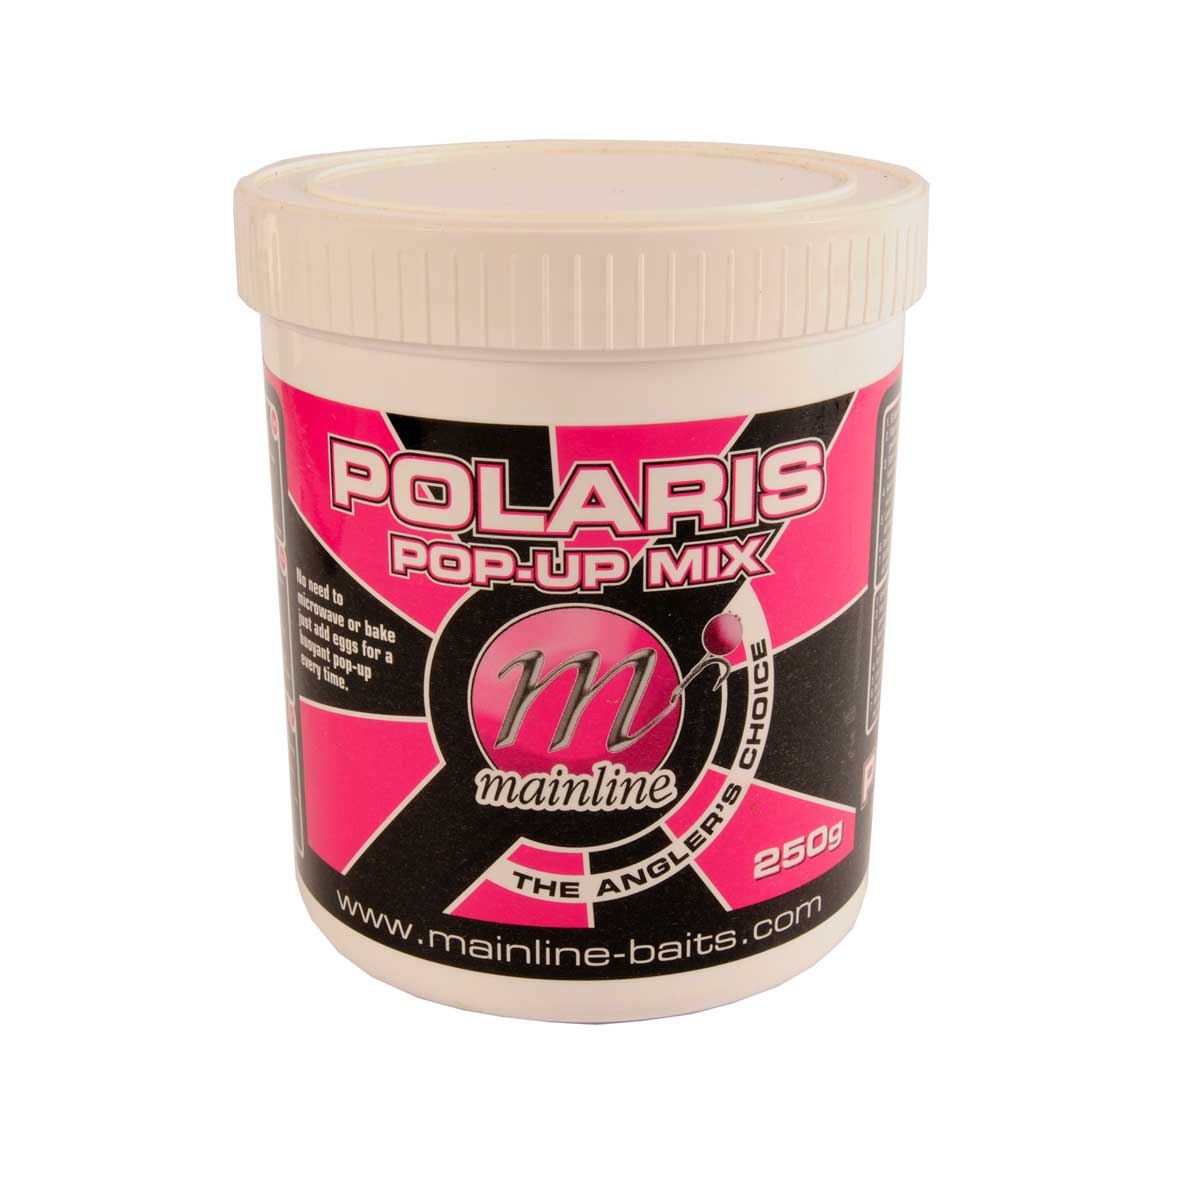 Polaris pop up mix 250 gram